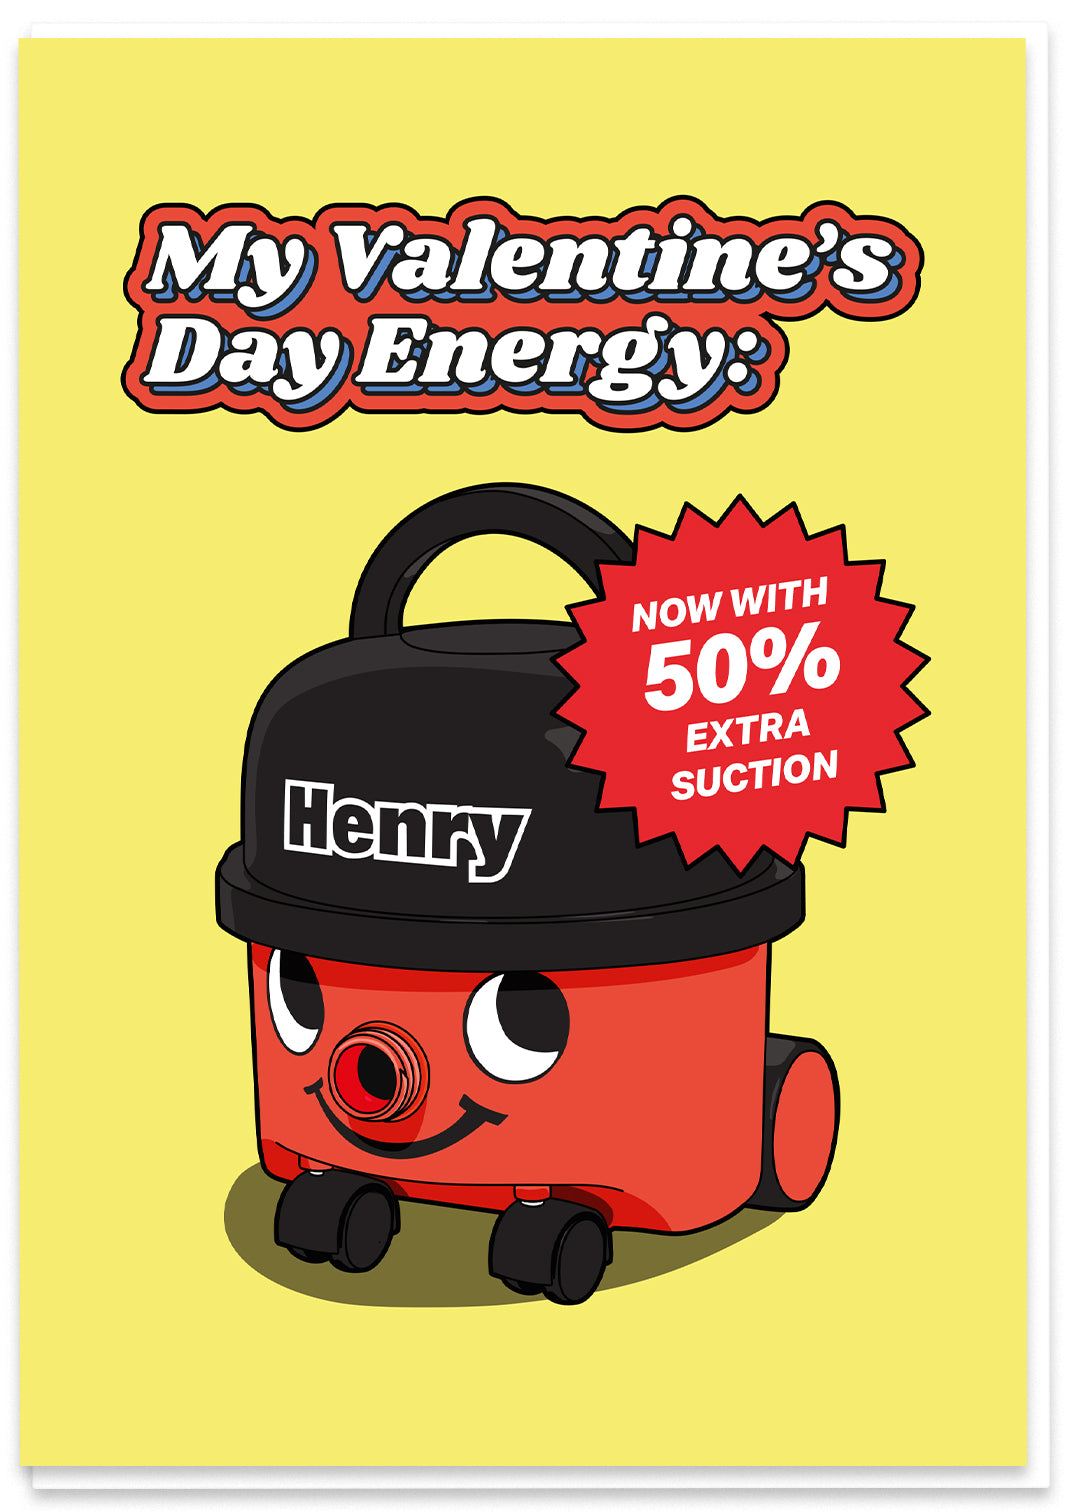 Henry's Valentine's Day Energy